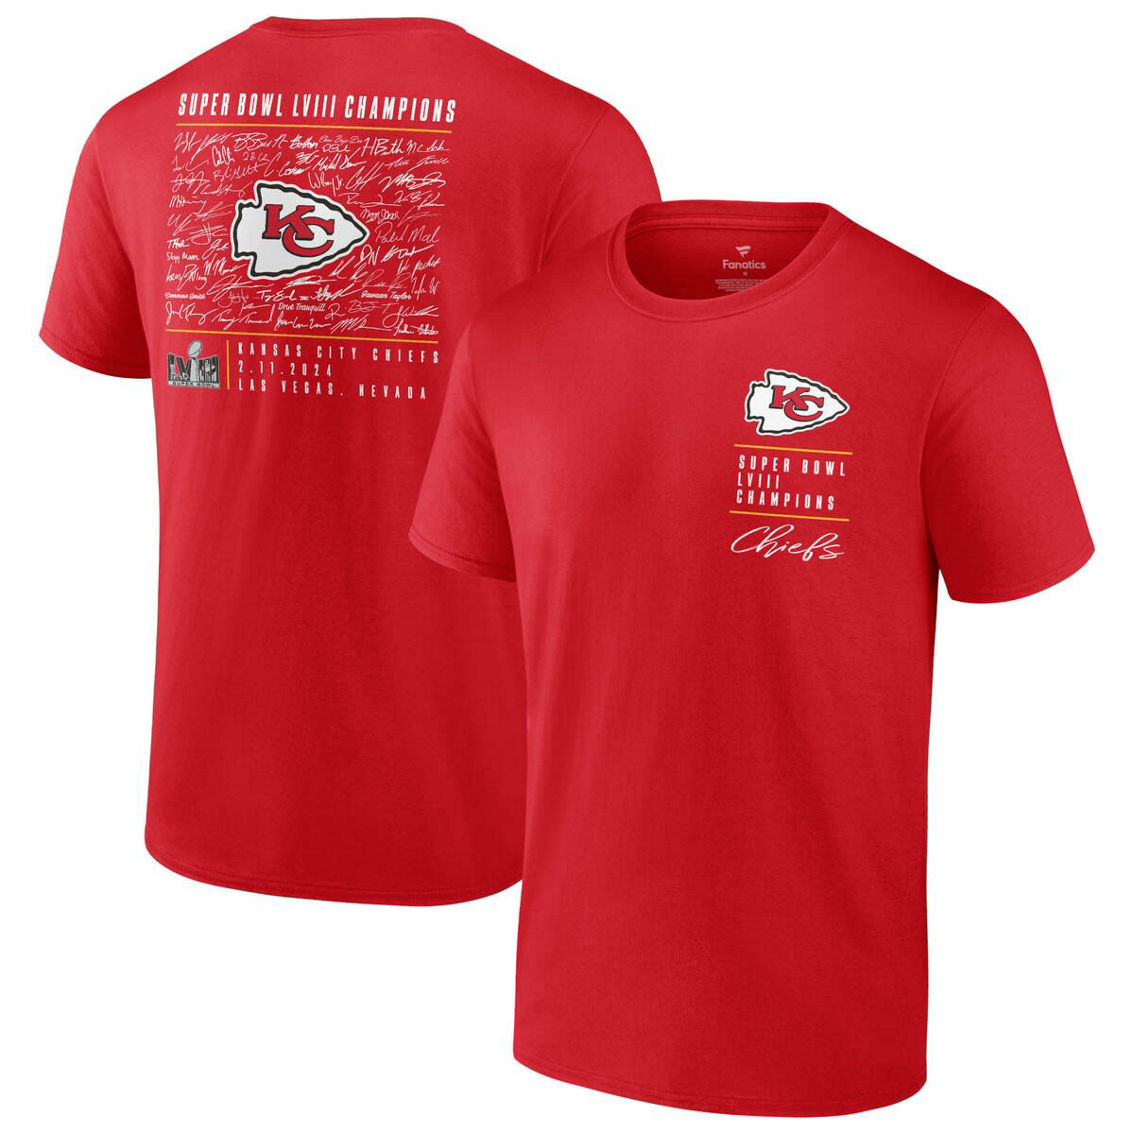 Fanatics Branded Men's Red Kansas City Chiefs Super Bowl LVIII Autograph T-Shirt - Image 2 of 4